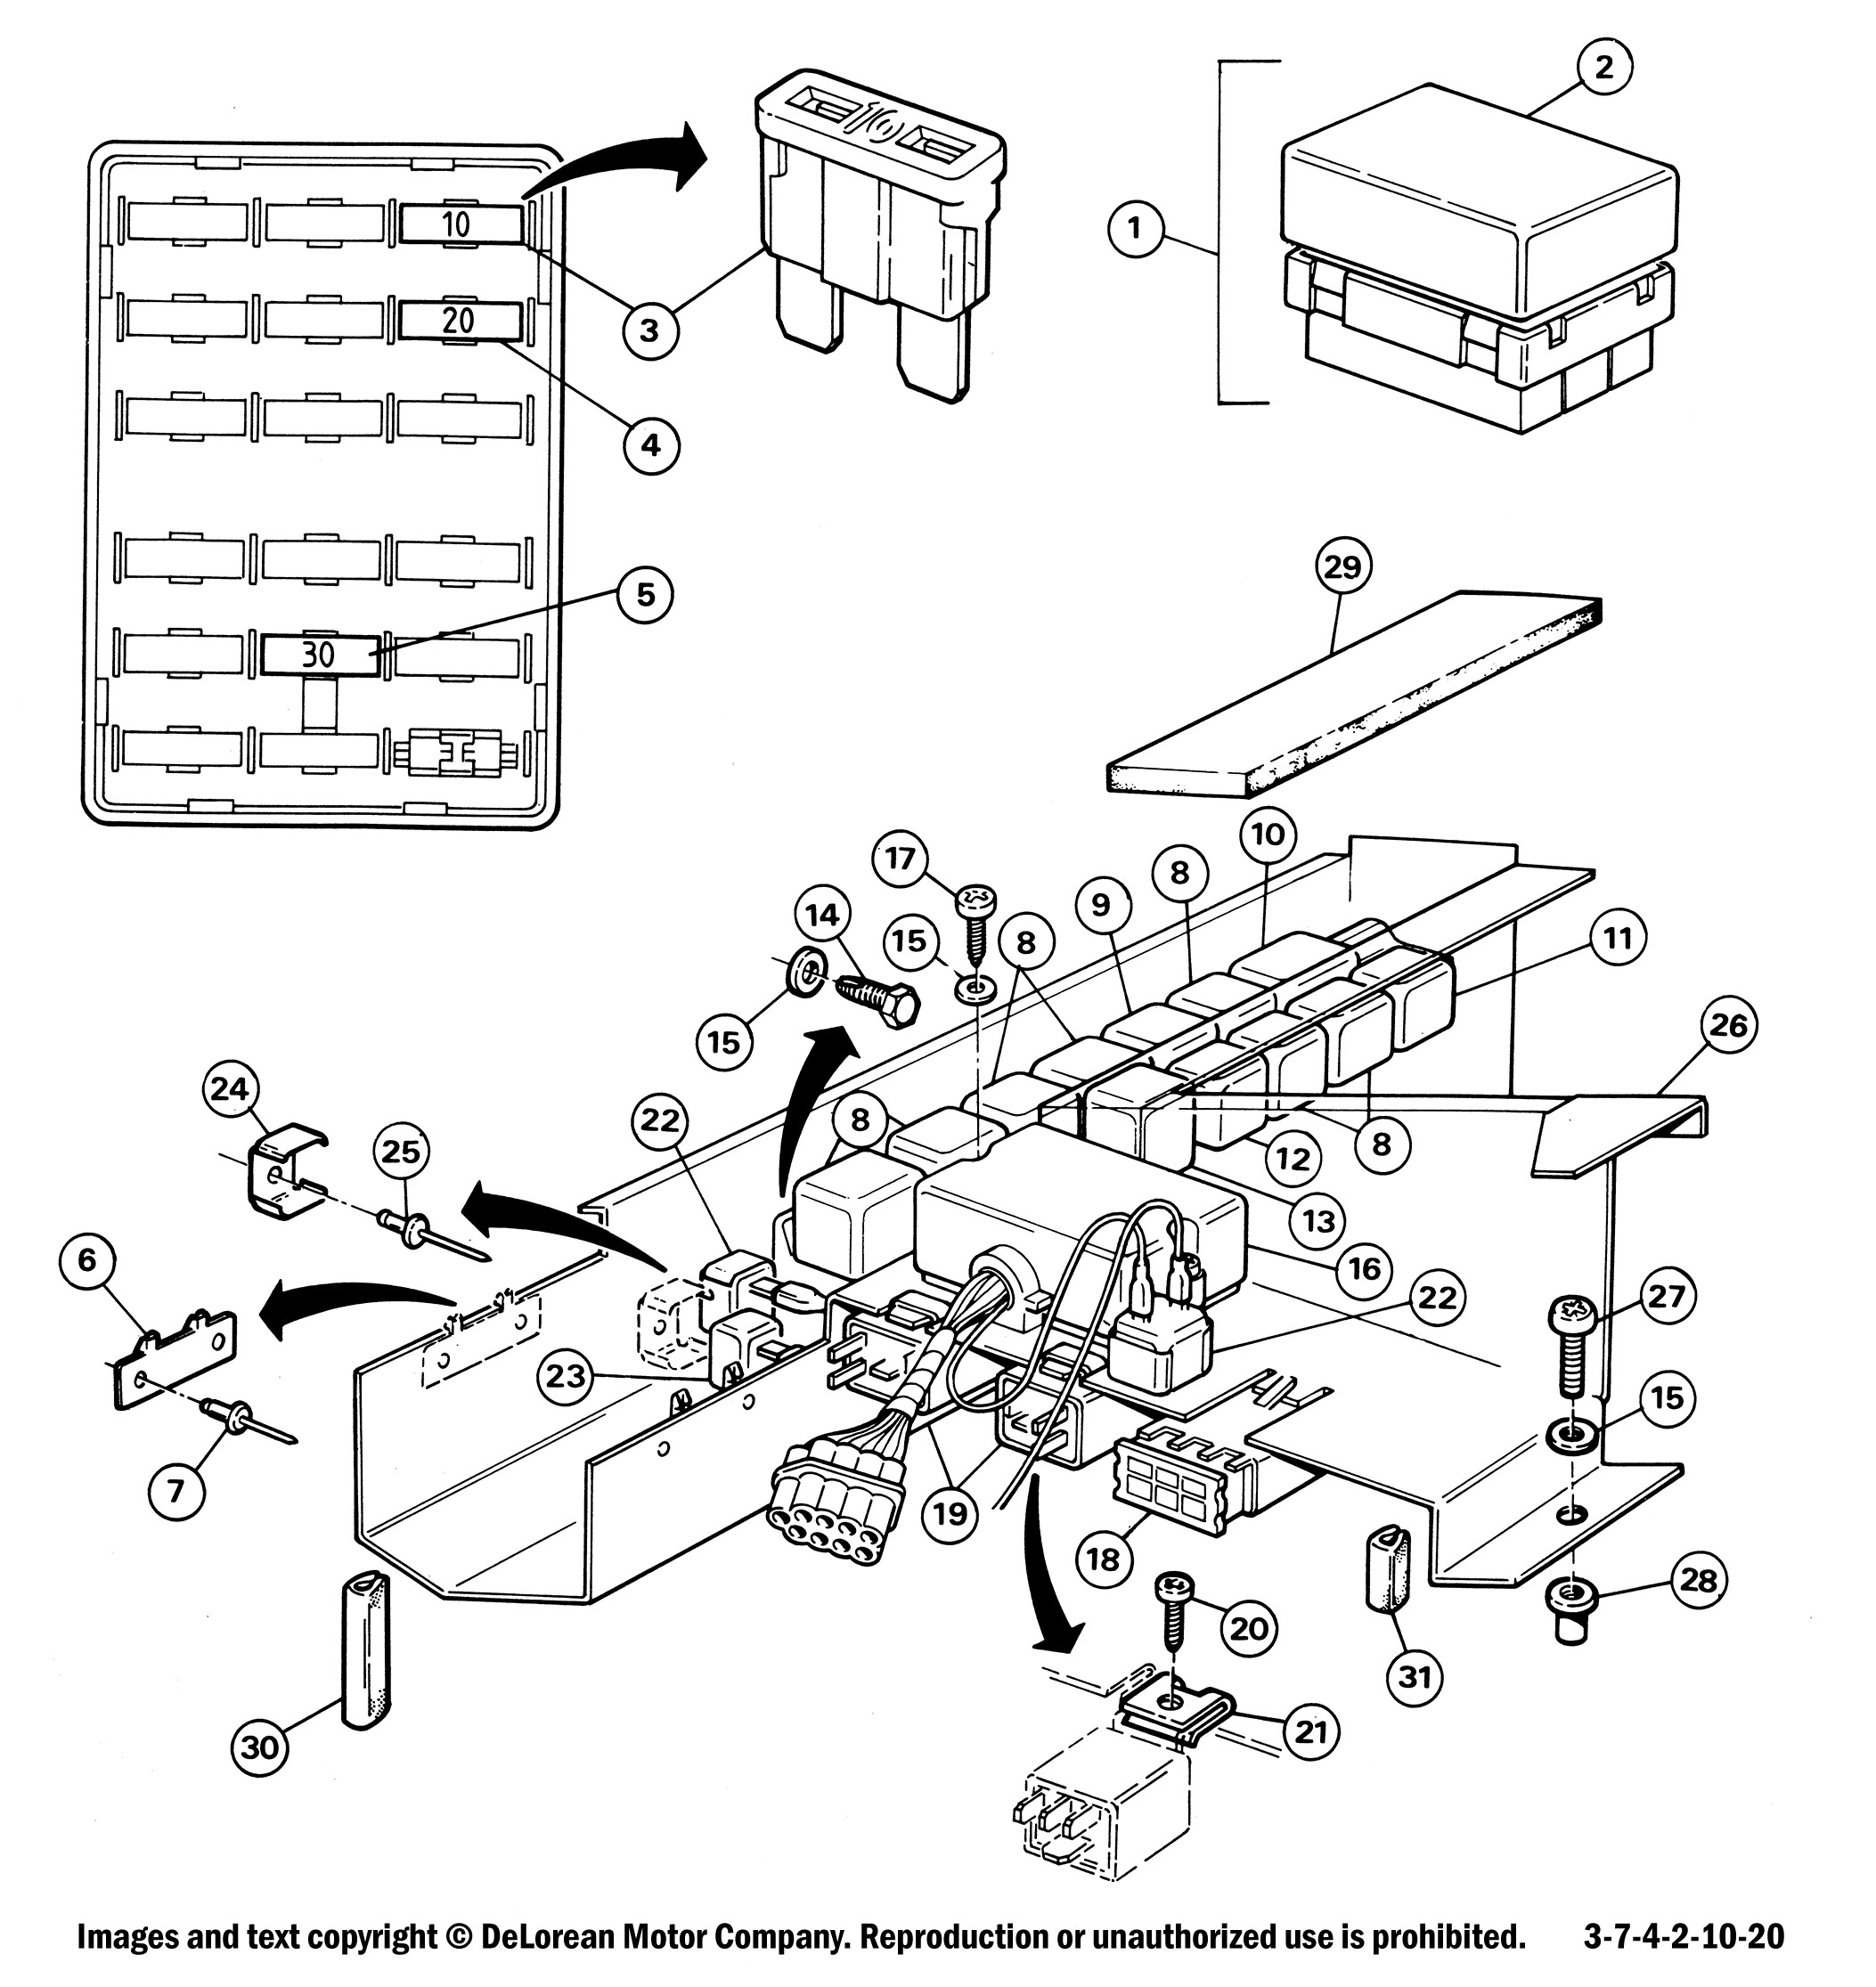 3-7-4 Fuse Box/Relays - Electrical - Parts Parts, Service, Restoration